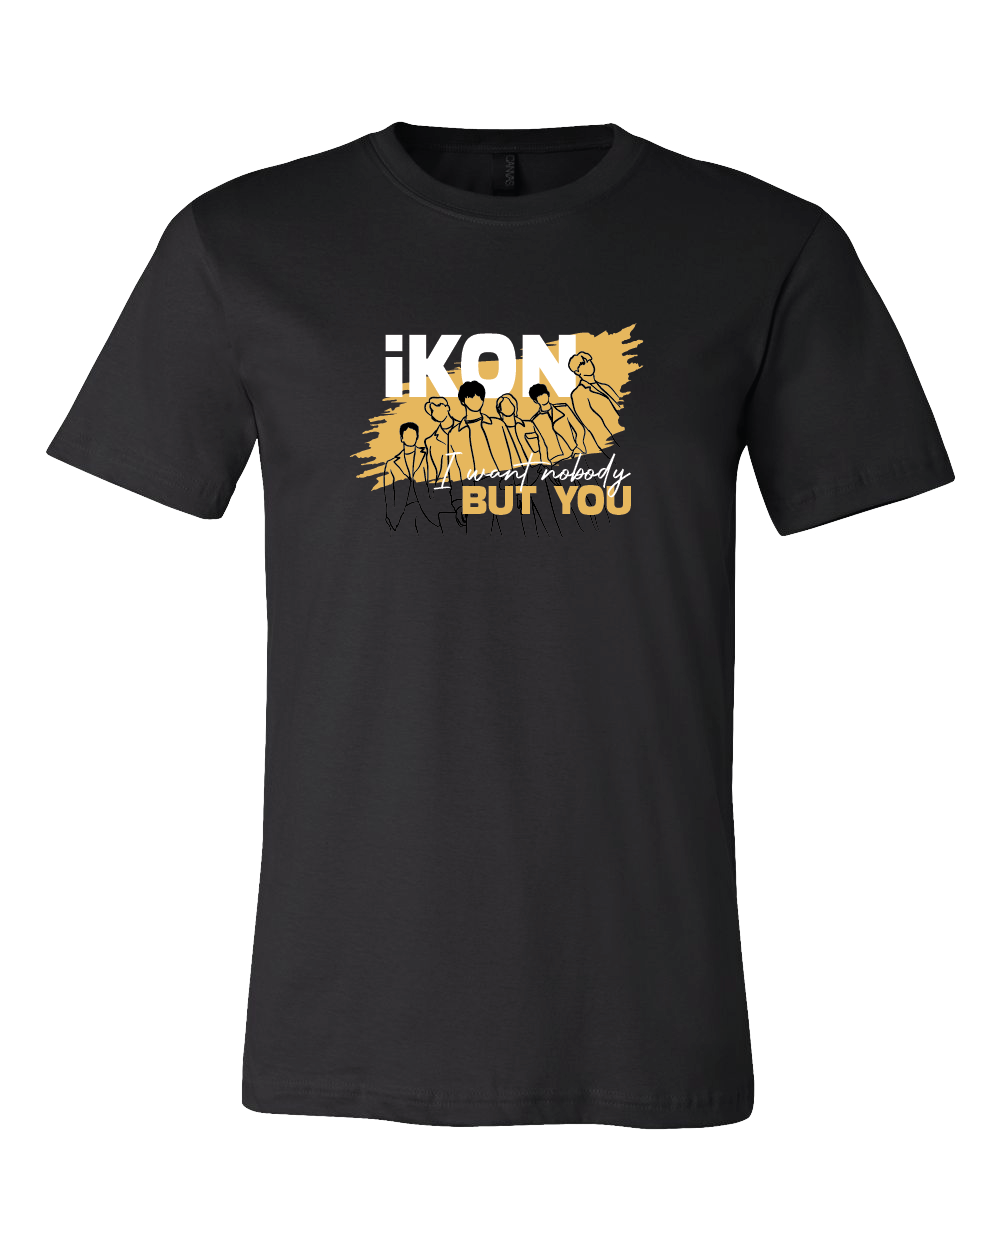 Tshirt - Ikon But You